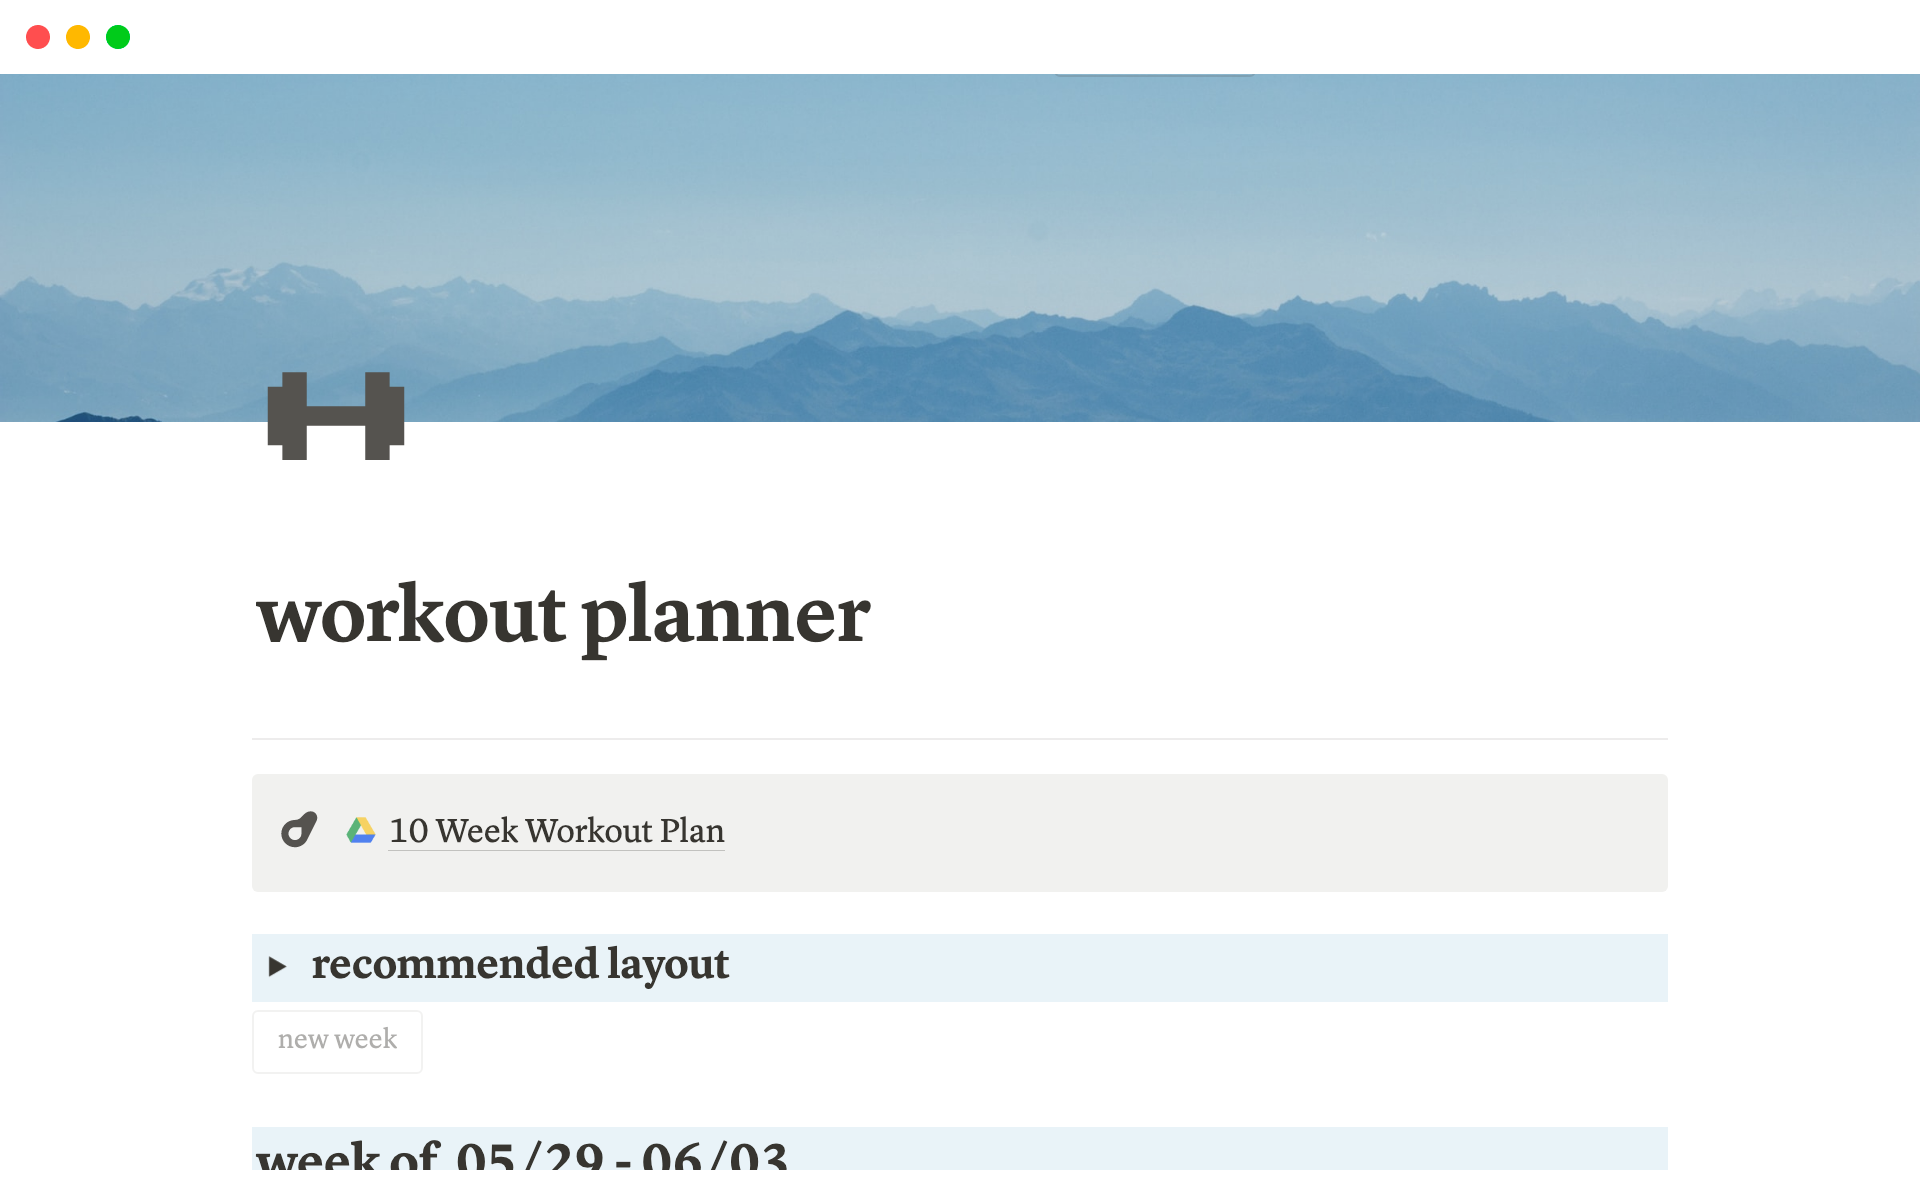 Vista previa de plantilla para Weekly Planner for Home Workouts